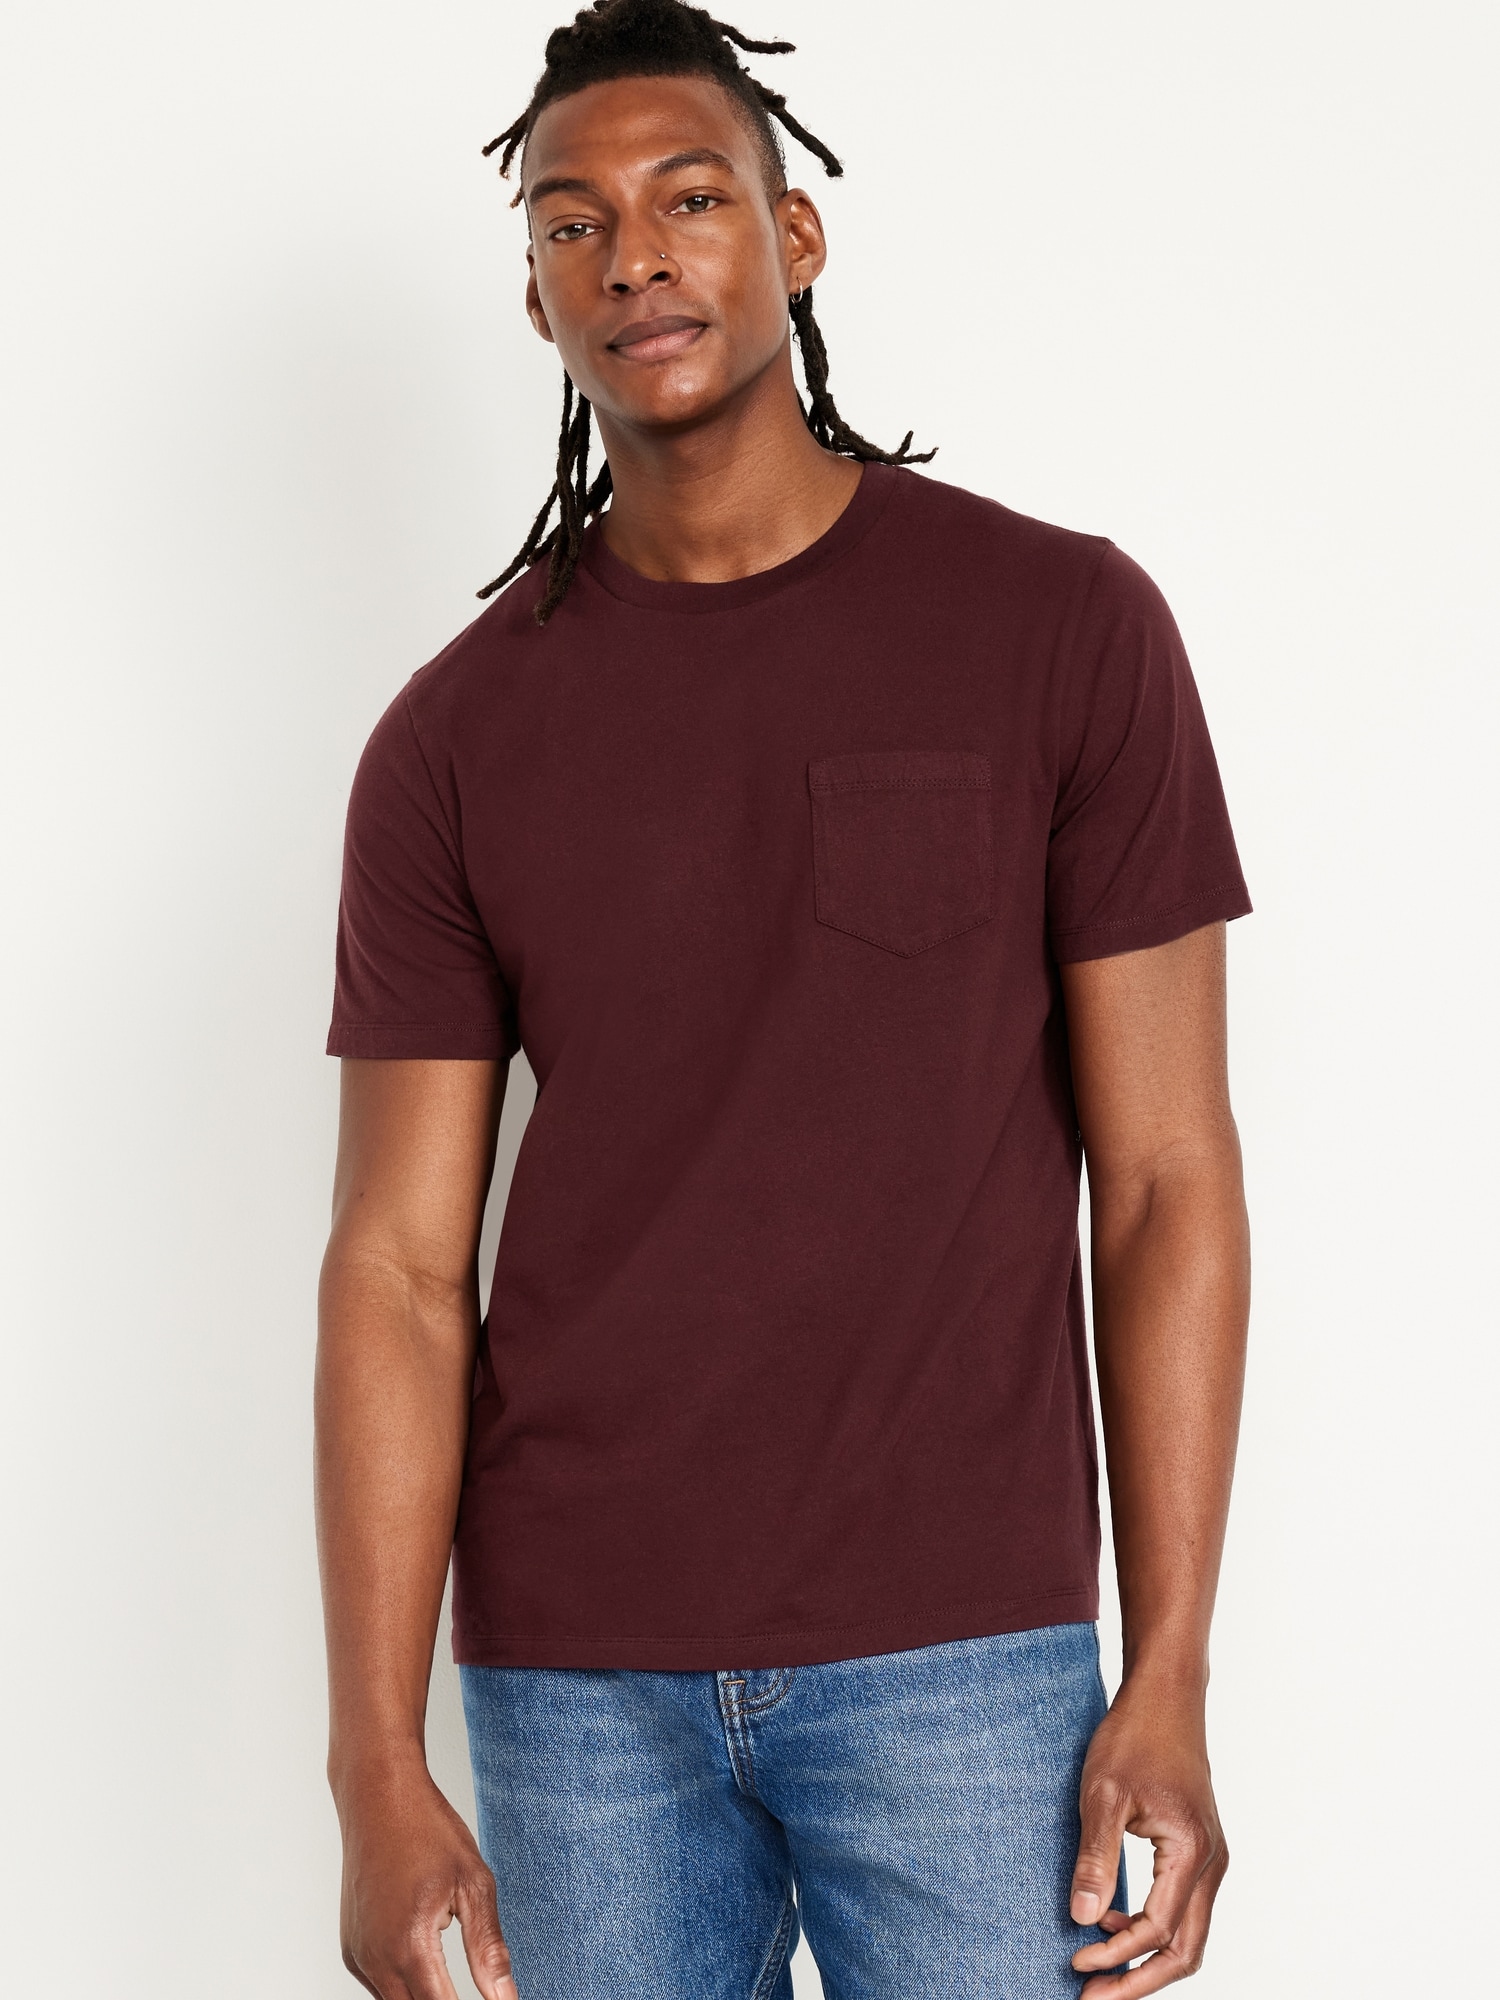 Crew-Neck Pocket T-Shirt Hot Deal